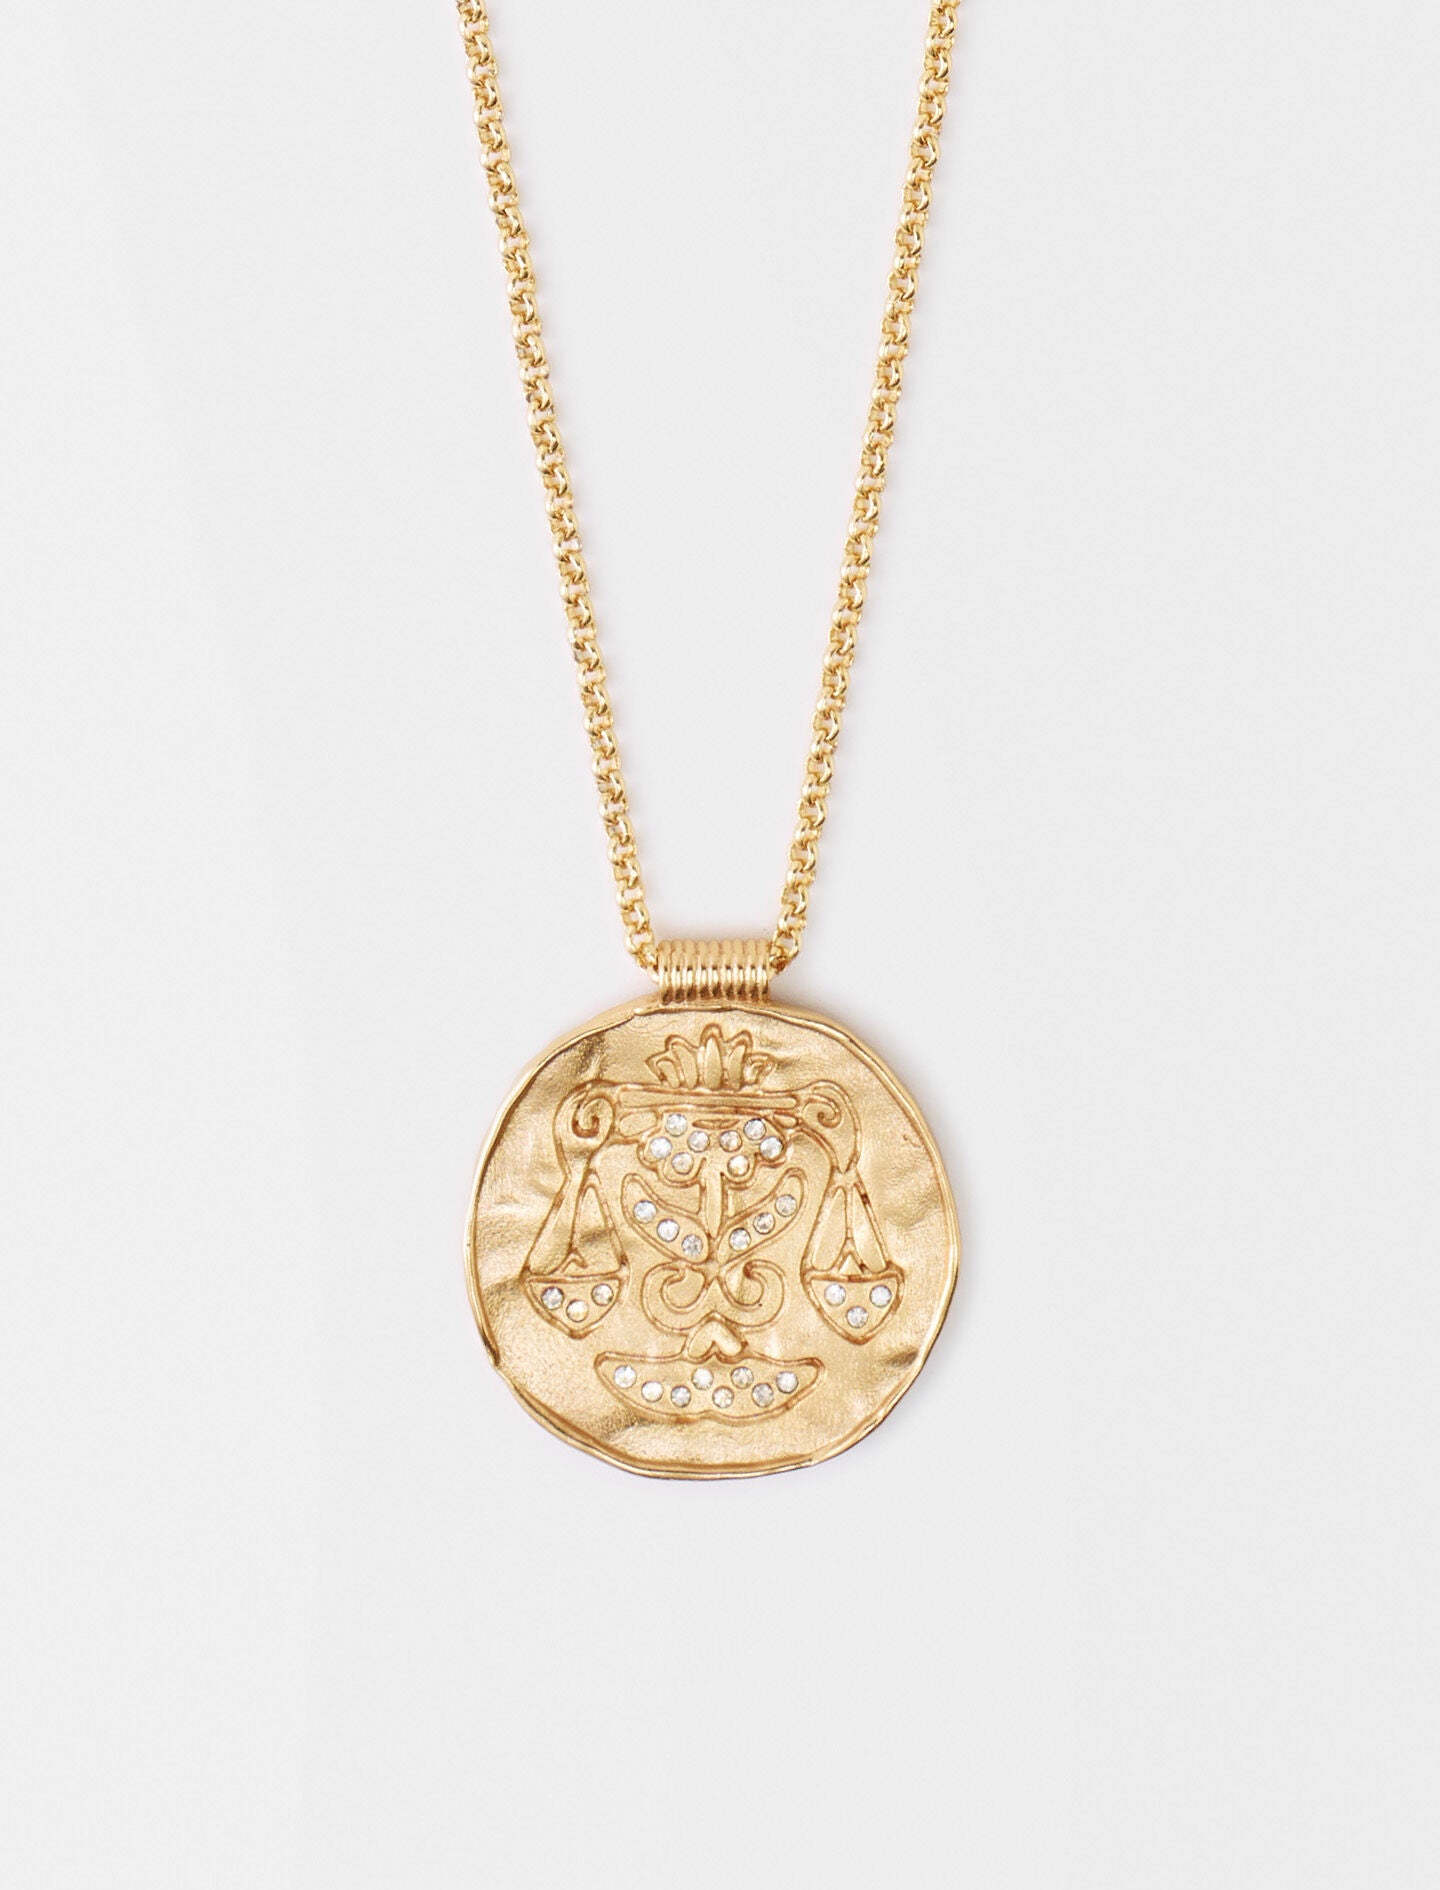 Libra-featured-Libra zodiac medal